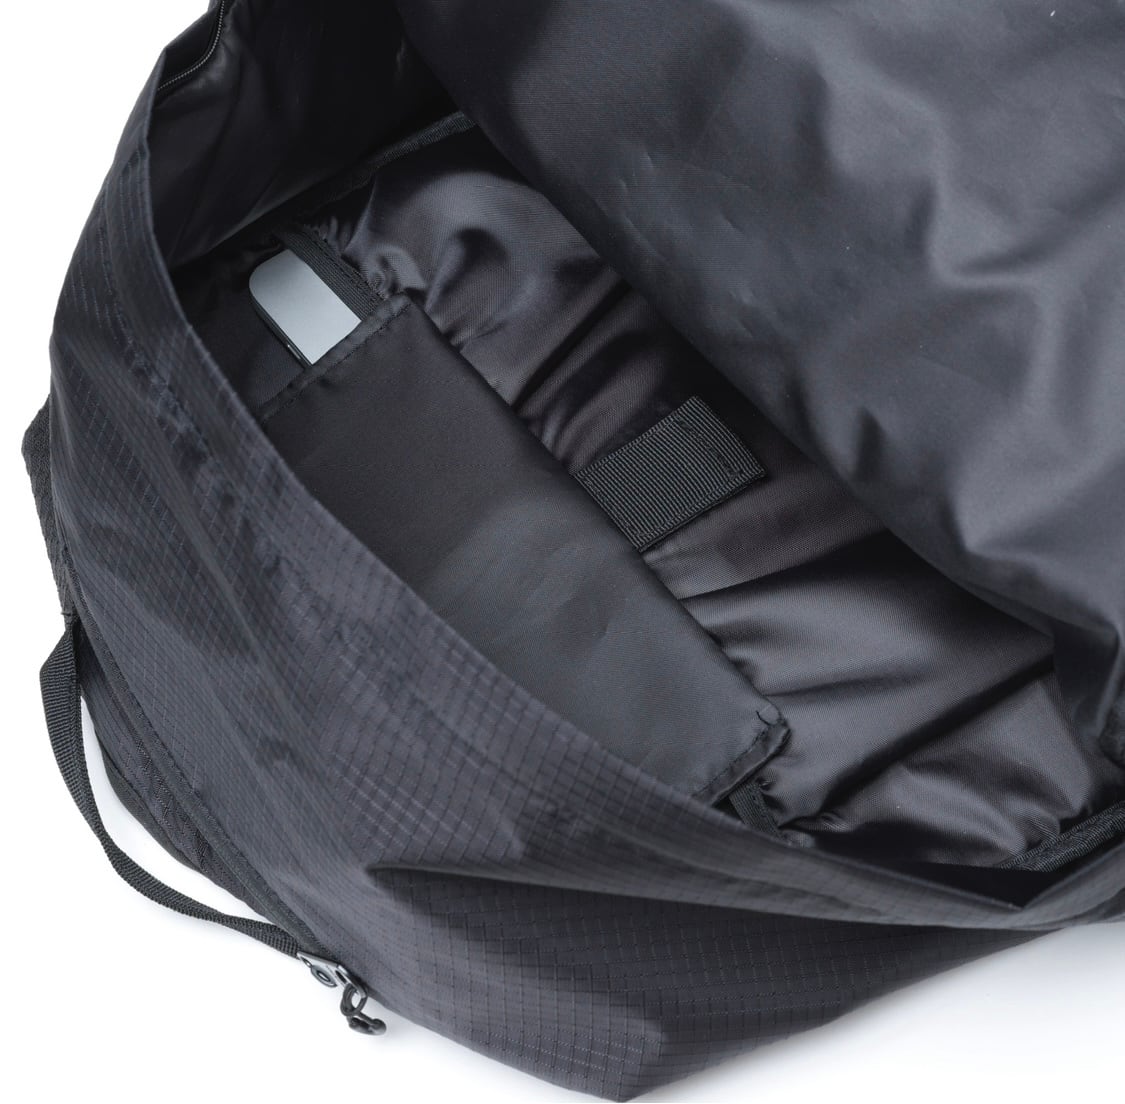 PACKING TRAIL BACK PACK BLACK PA-039 черный мужской женский повседневный рюкзак рюкзак уплотнение 